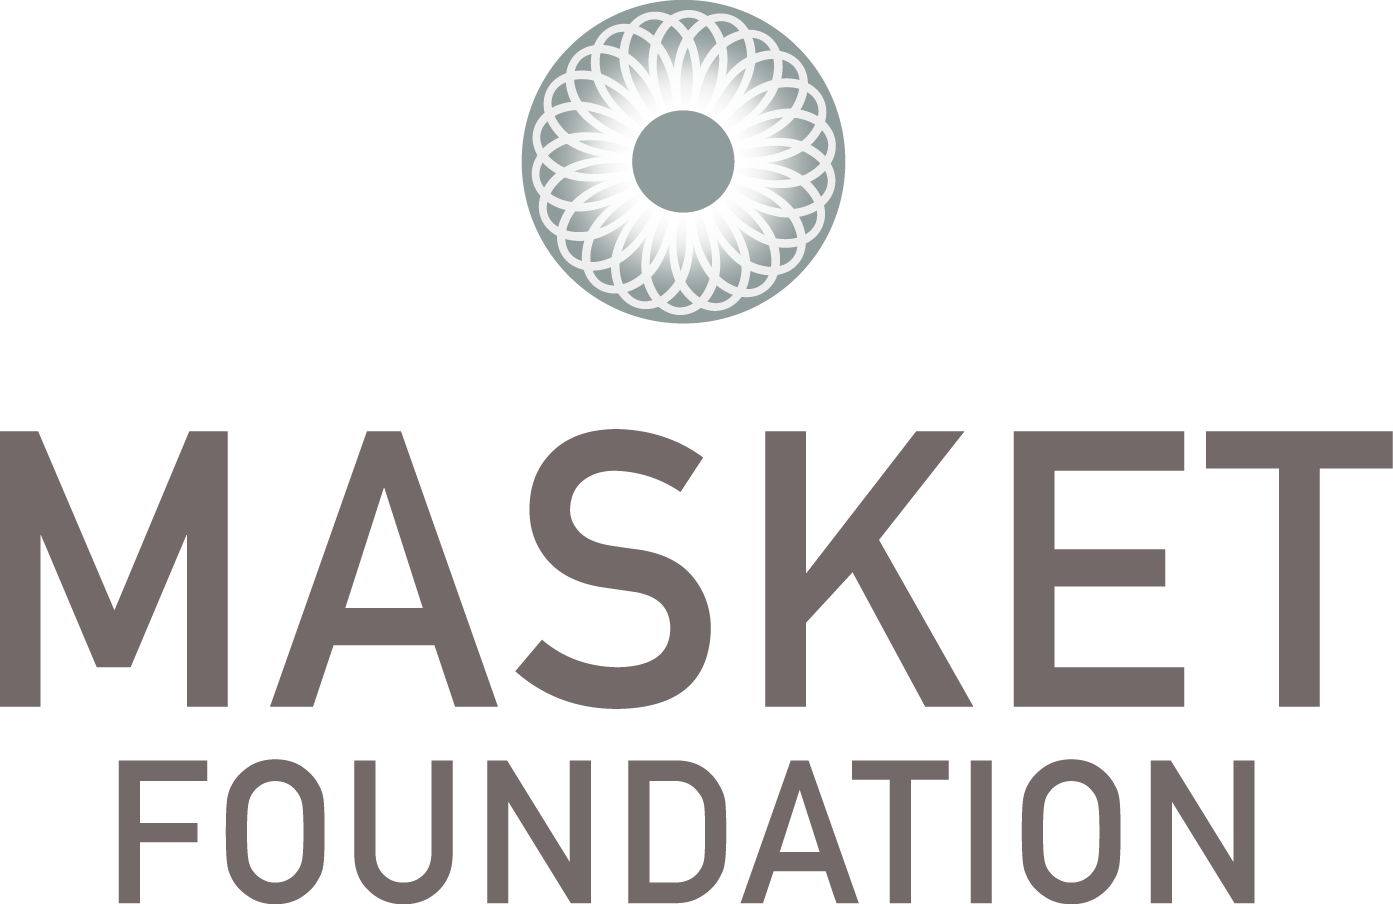 The Masket Foundation